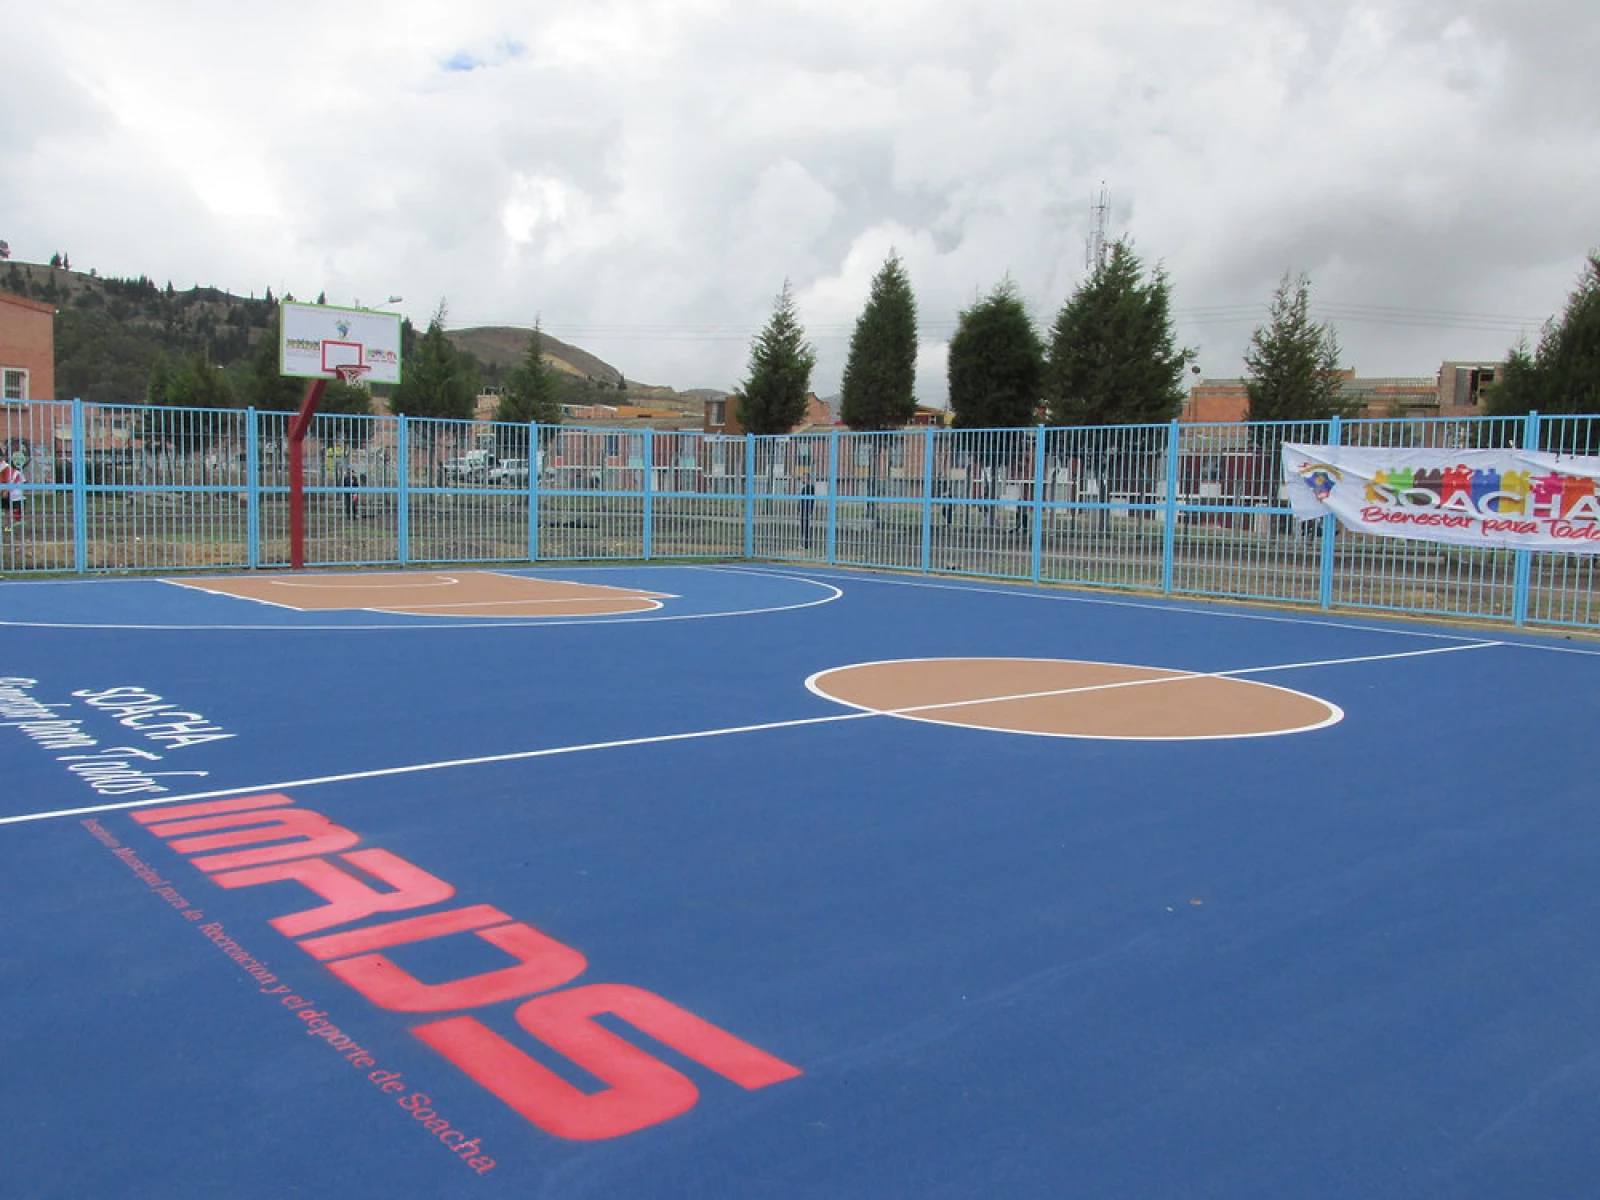 San Mateo (Soacha) Basketball Court: Tibanica San Mateo Courts of the